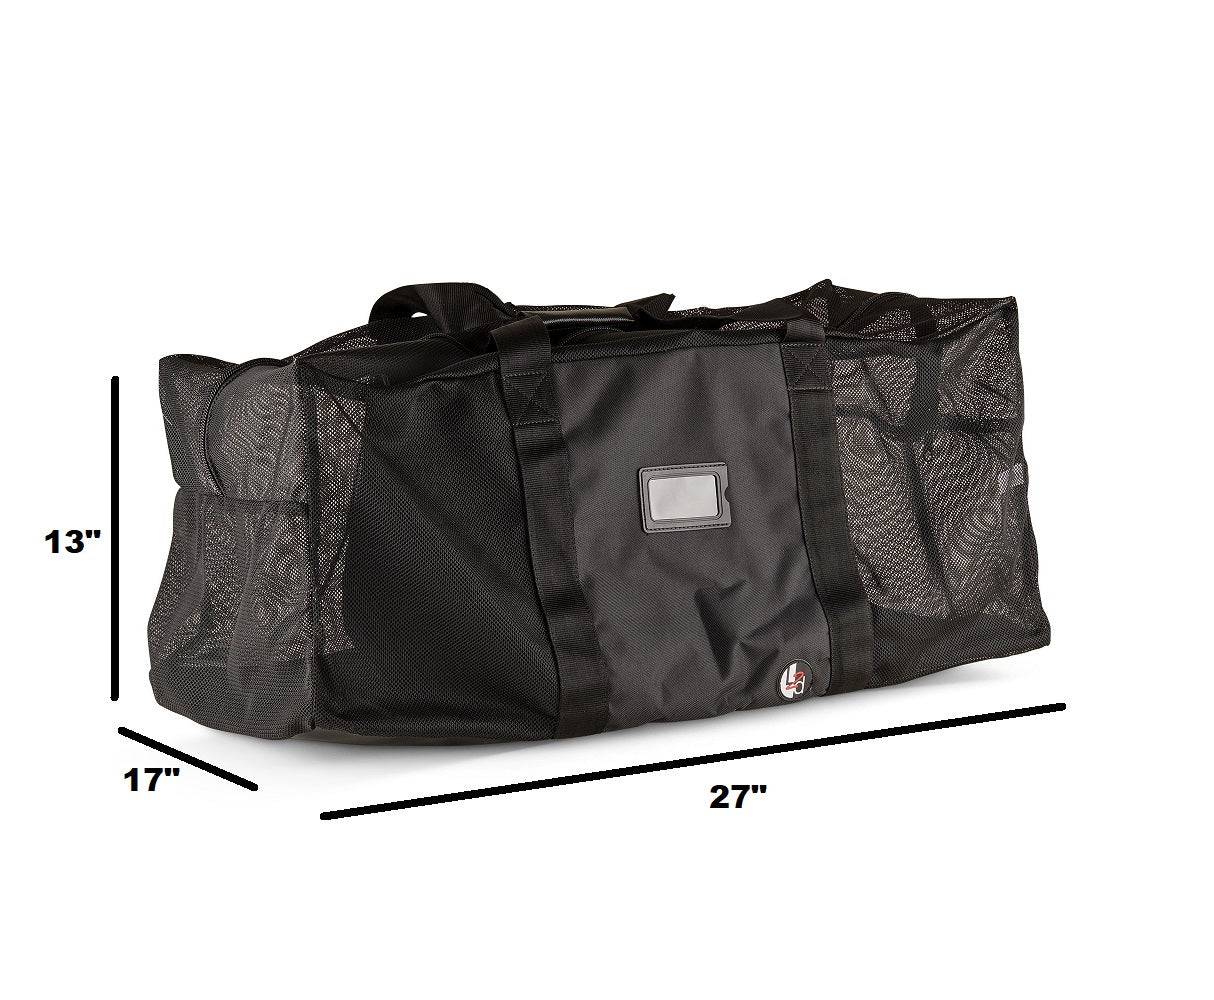 Turnout Gear Bags LINE2design Mesh Bags